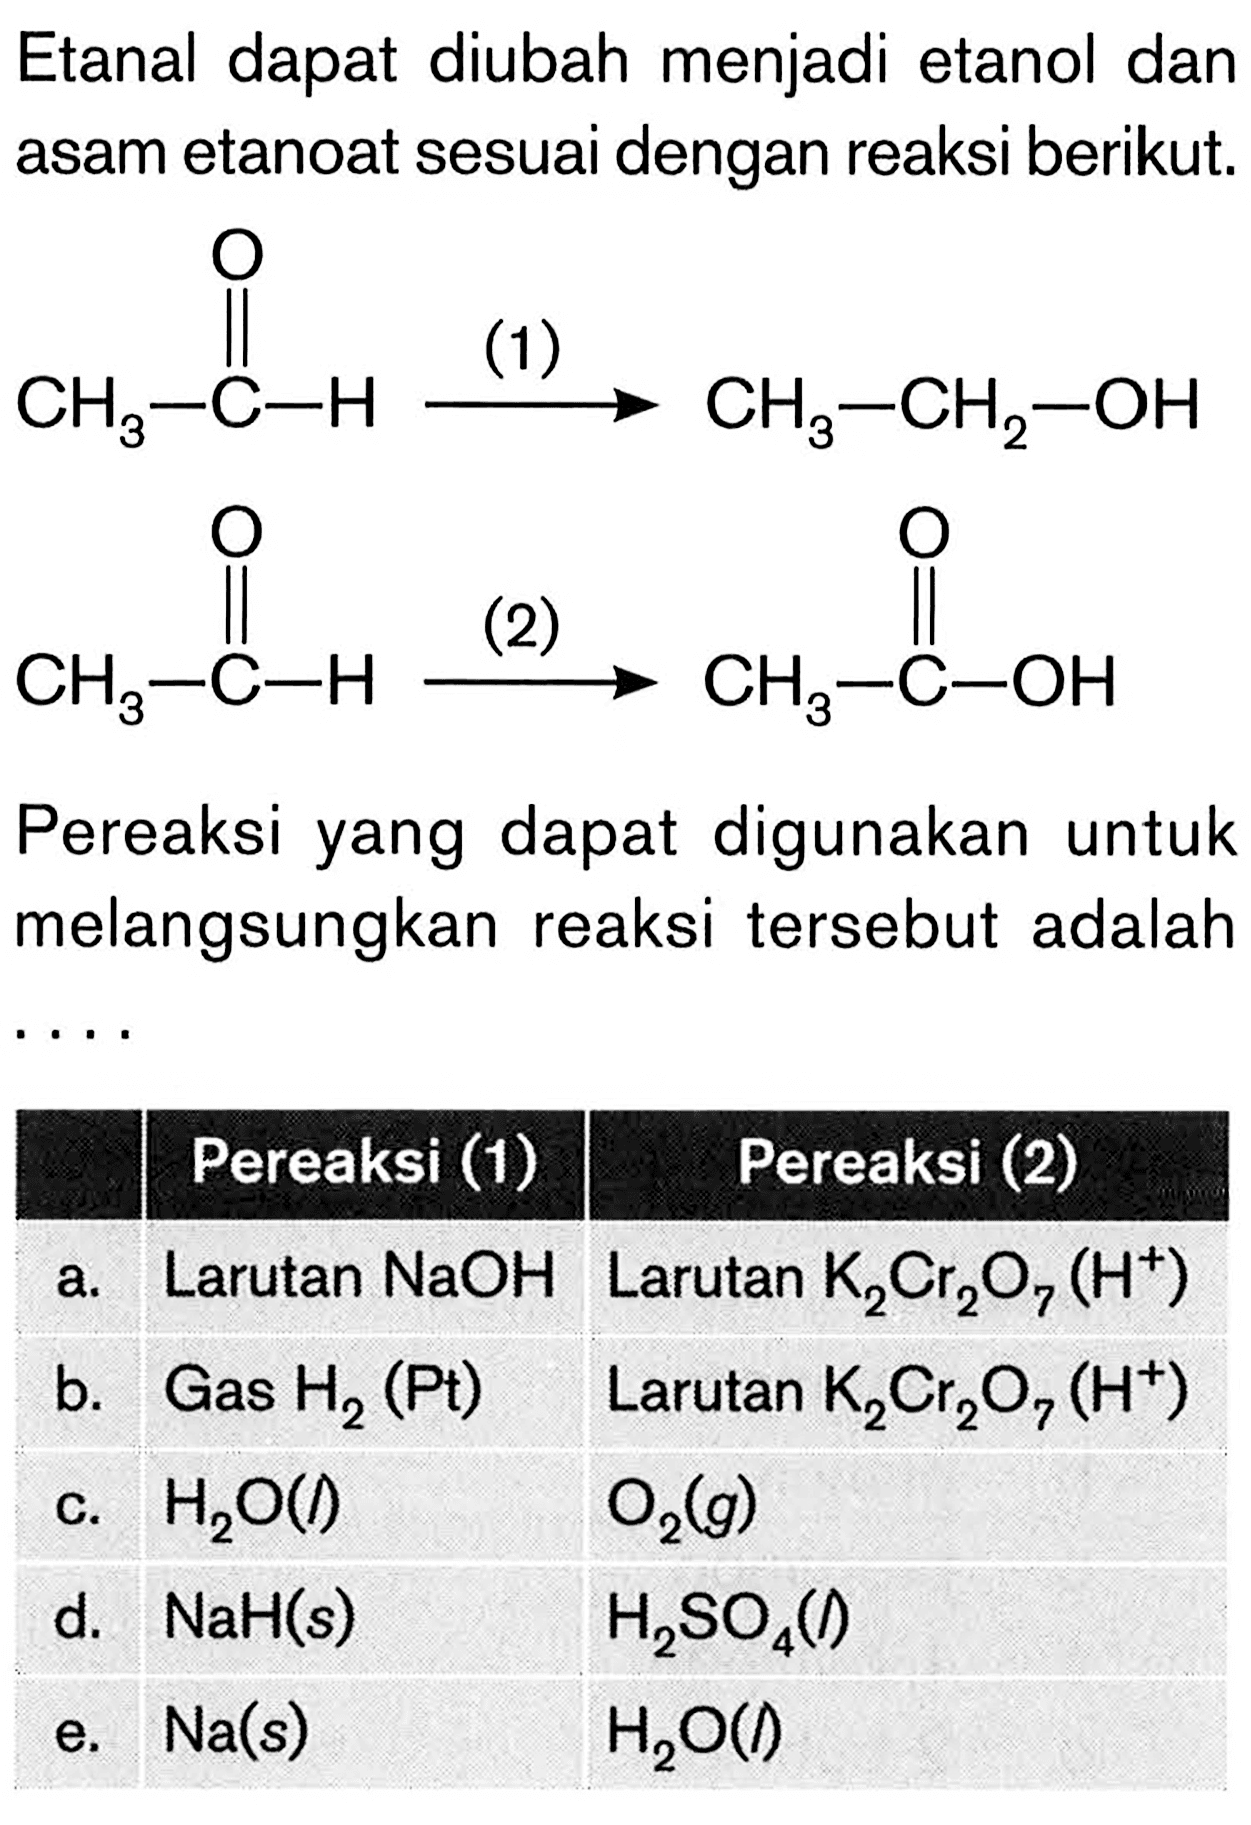 Etanal dapat diubah menjadi etanol dan asam etanoat sesuai dengan reaksi berikut. O CH3-C-H (1) -> CH3-CH2-OH O O CH3-C-H (2) -> CH3-C-OH Pereaksi yang dapat digunakan untuk melangsungkan reaksi tersebut adalah .... Pereaksi (1) Pereaksi (2)